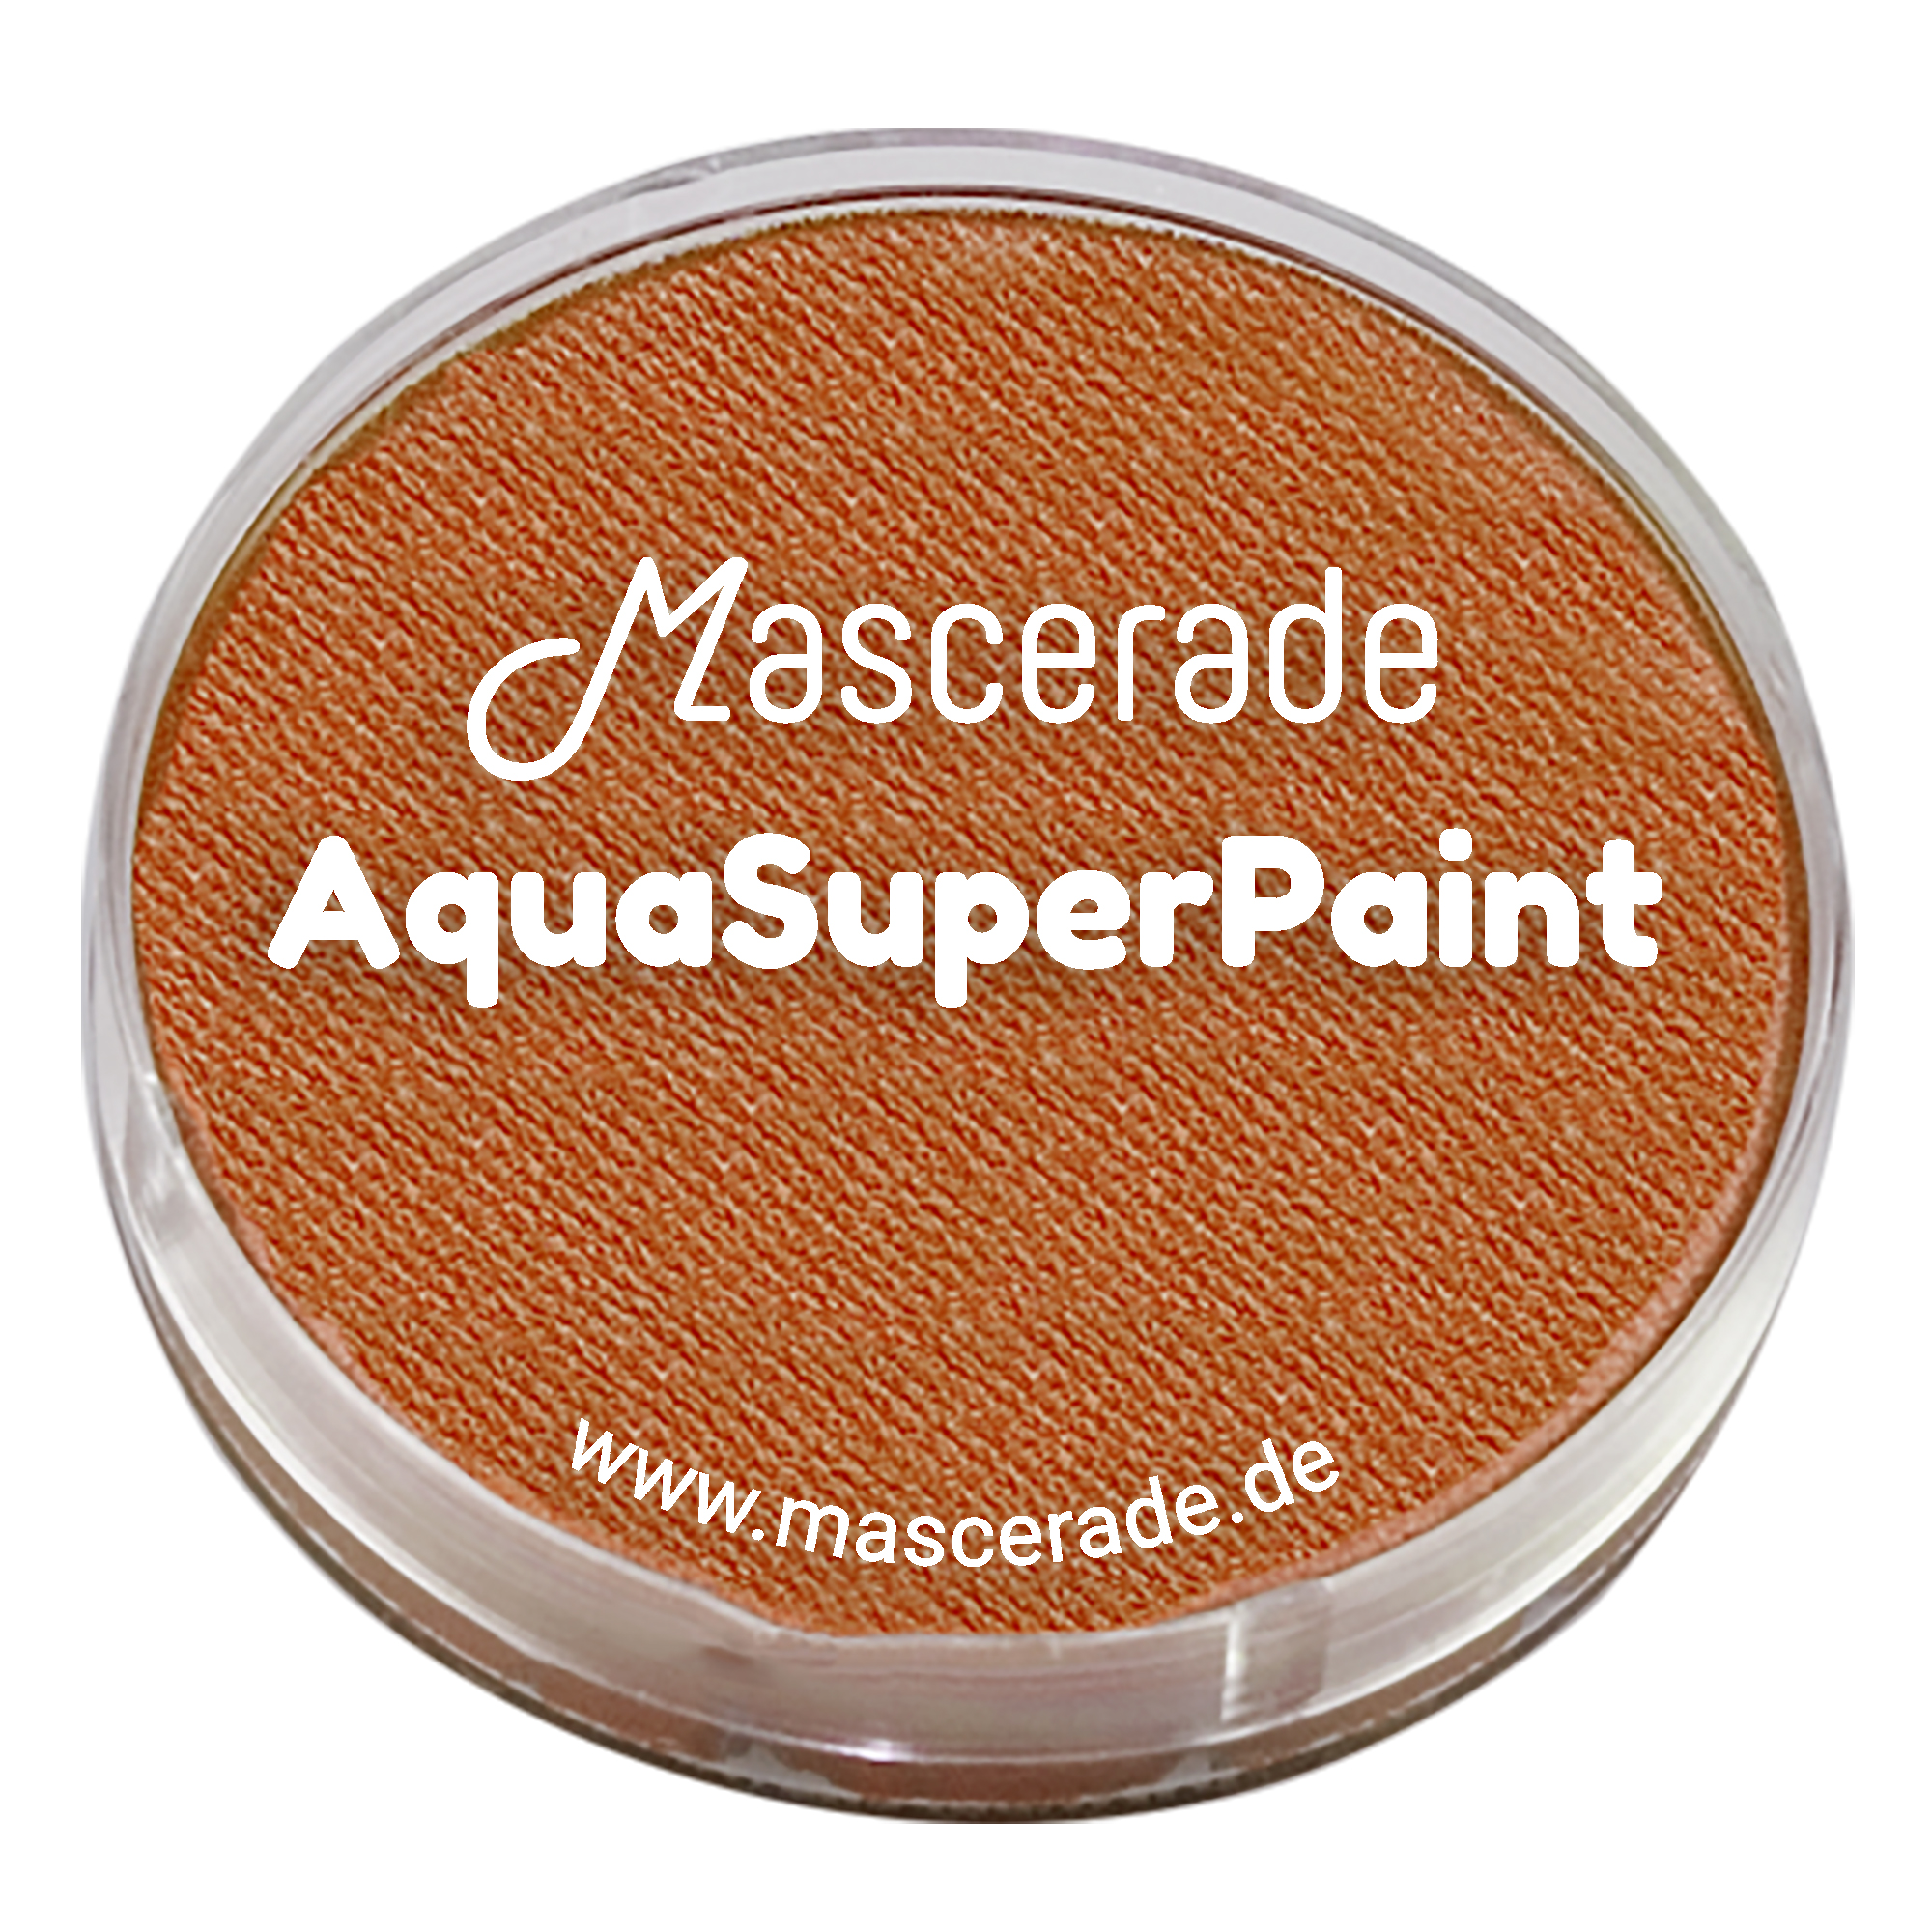 Mascerade AquaSuperPaint Bronze mit Glitter 30 ml Dose